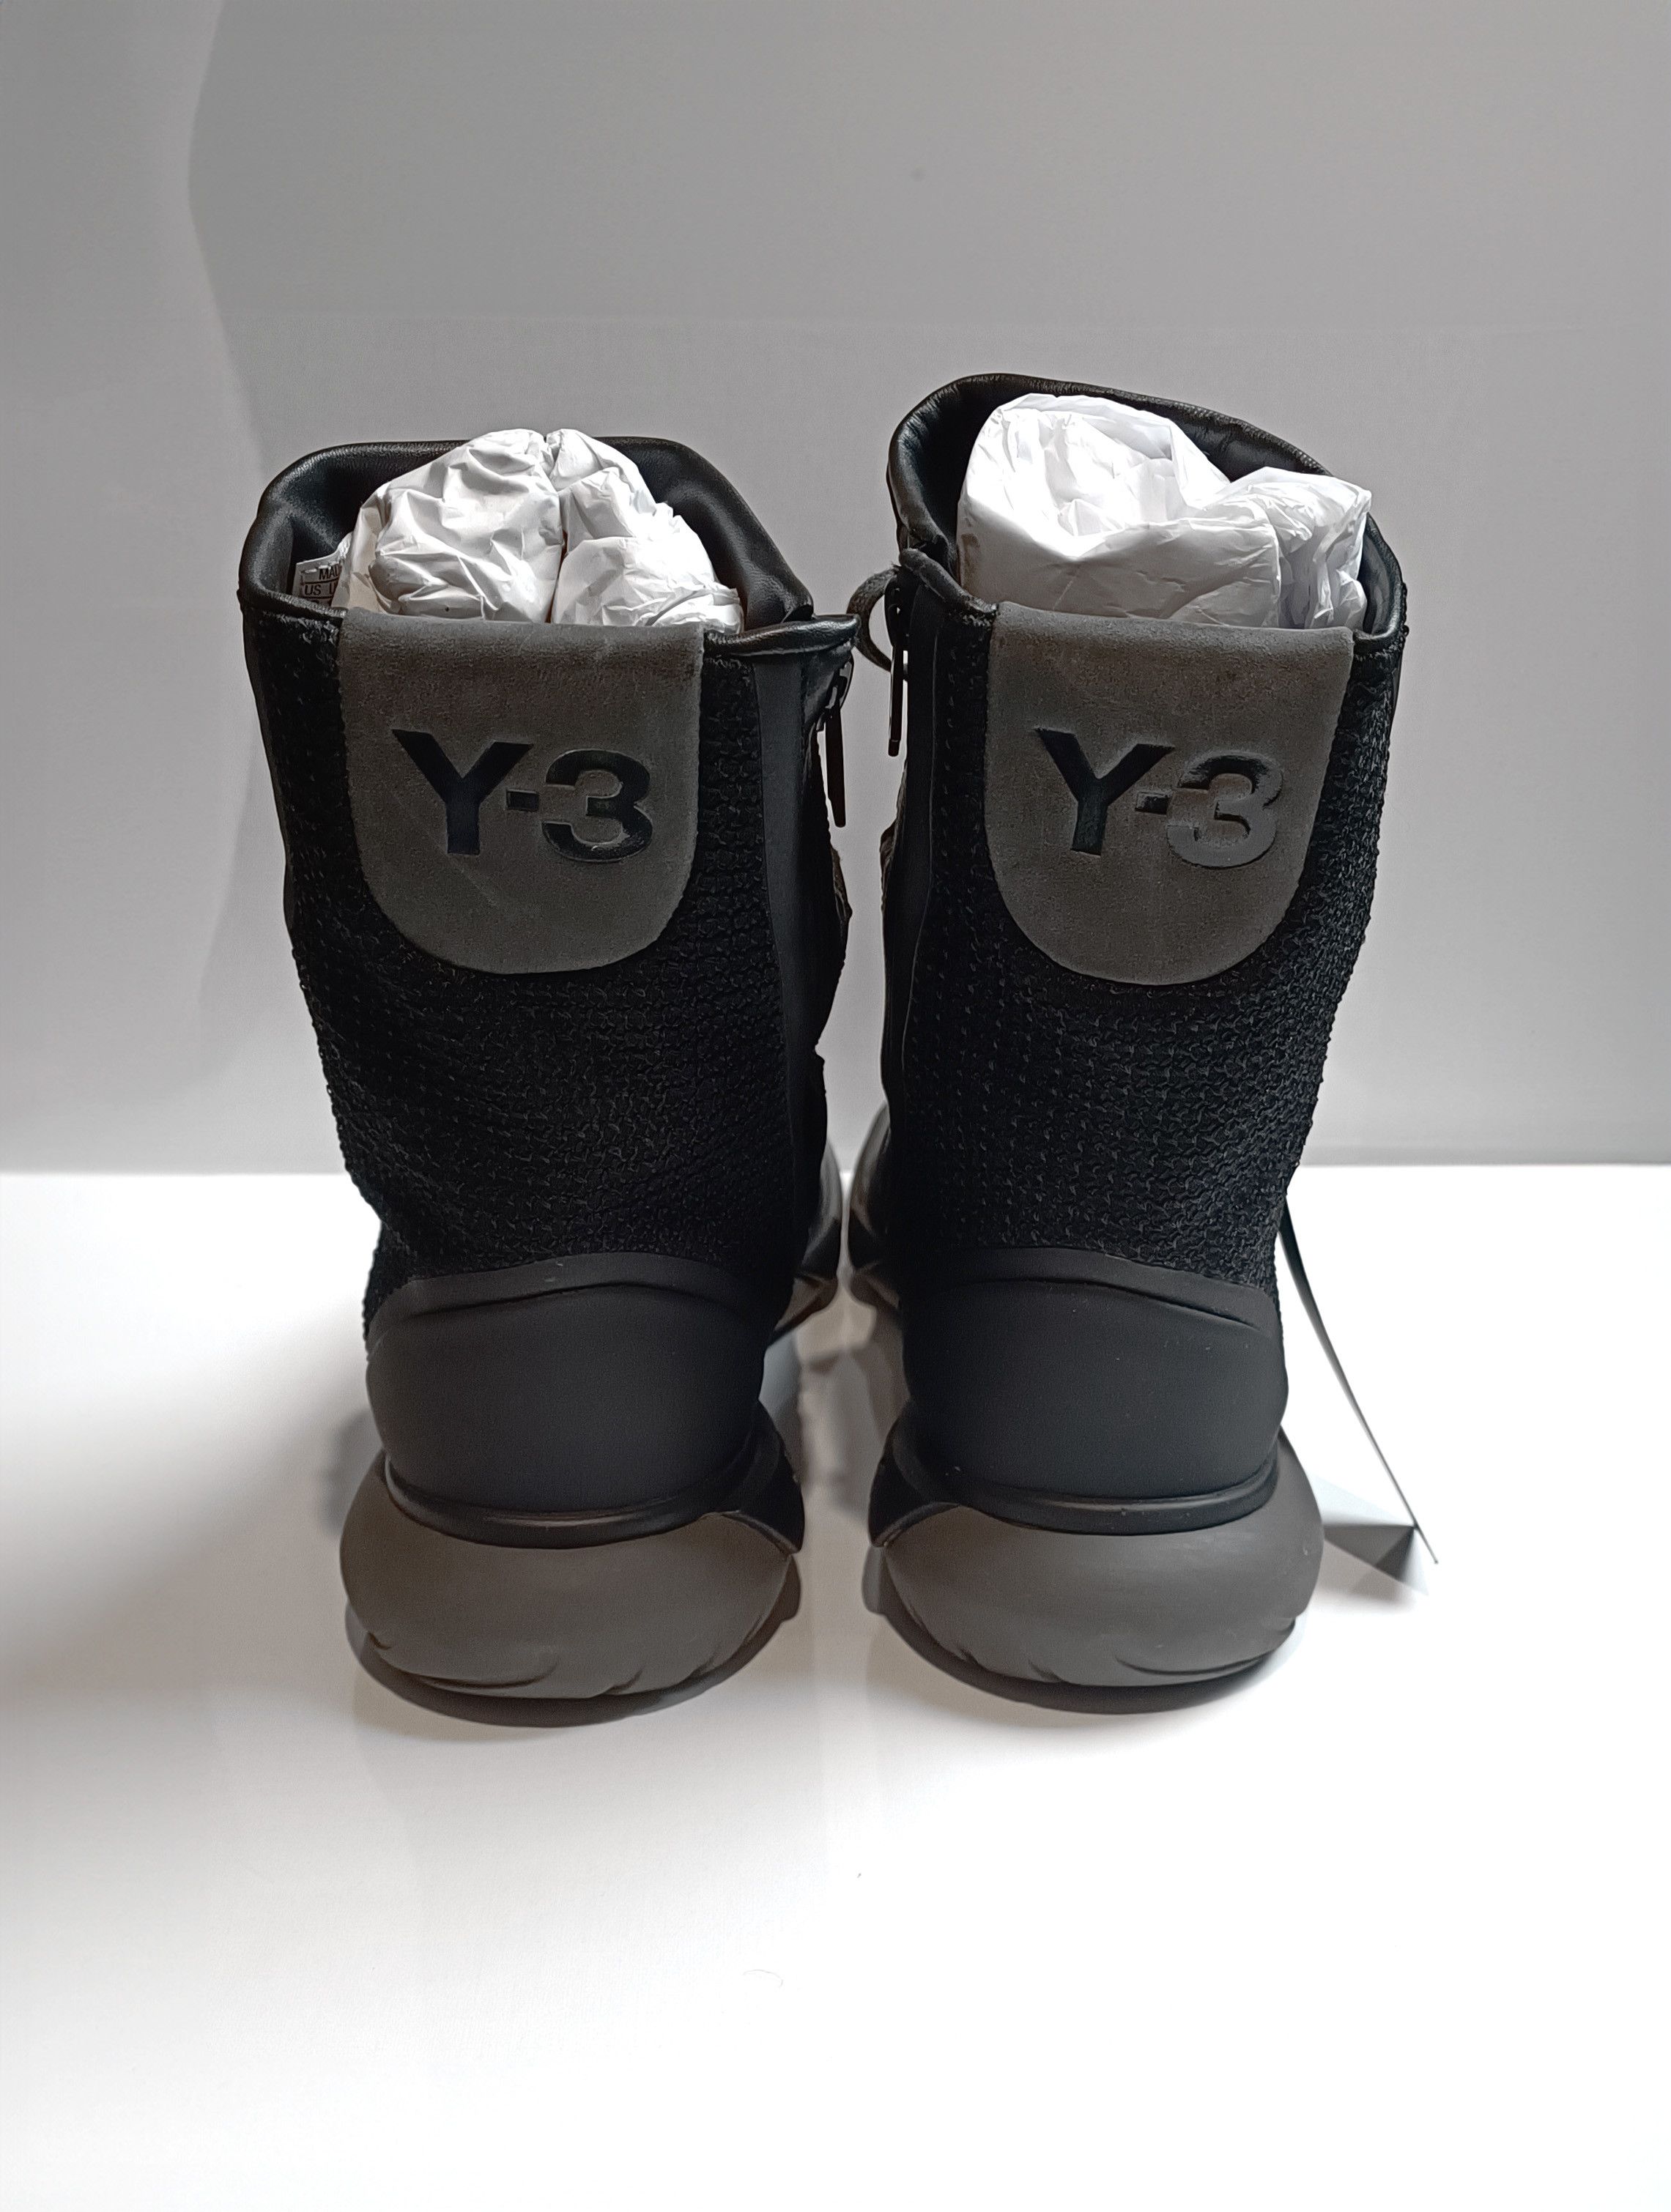 adidas Y-3 Yohji Yamamoto Qasa High Boot (Deadstock) - 8